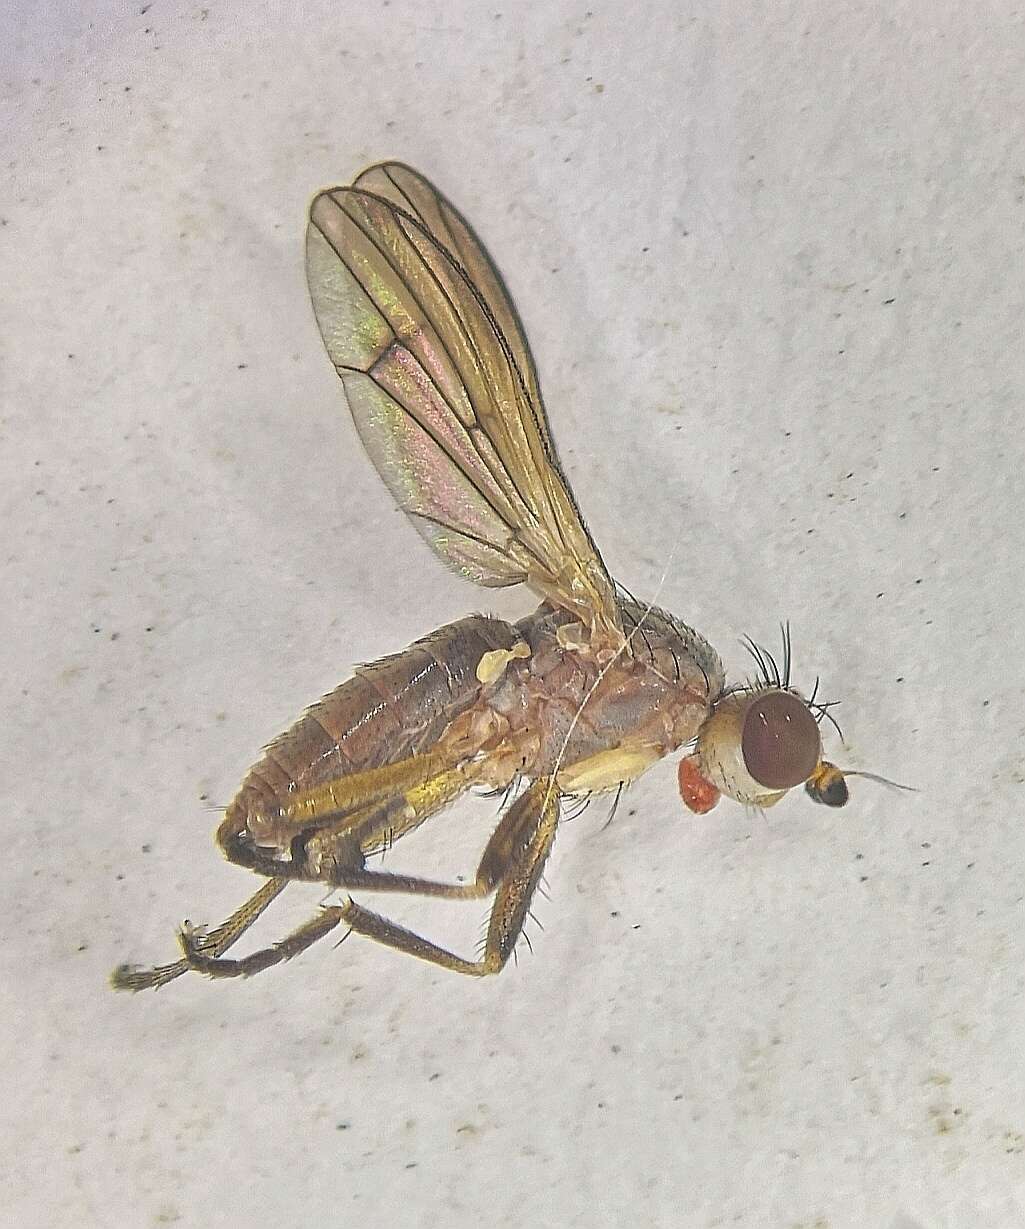 Image of Pherbellia dubia (Fallen 1820)